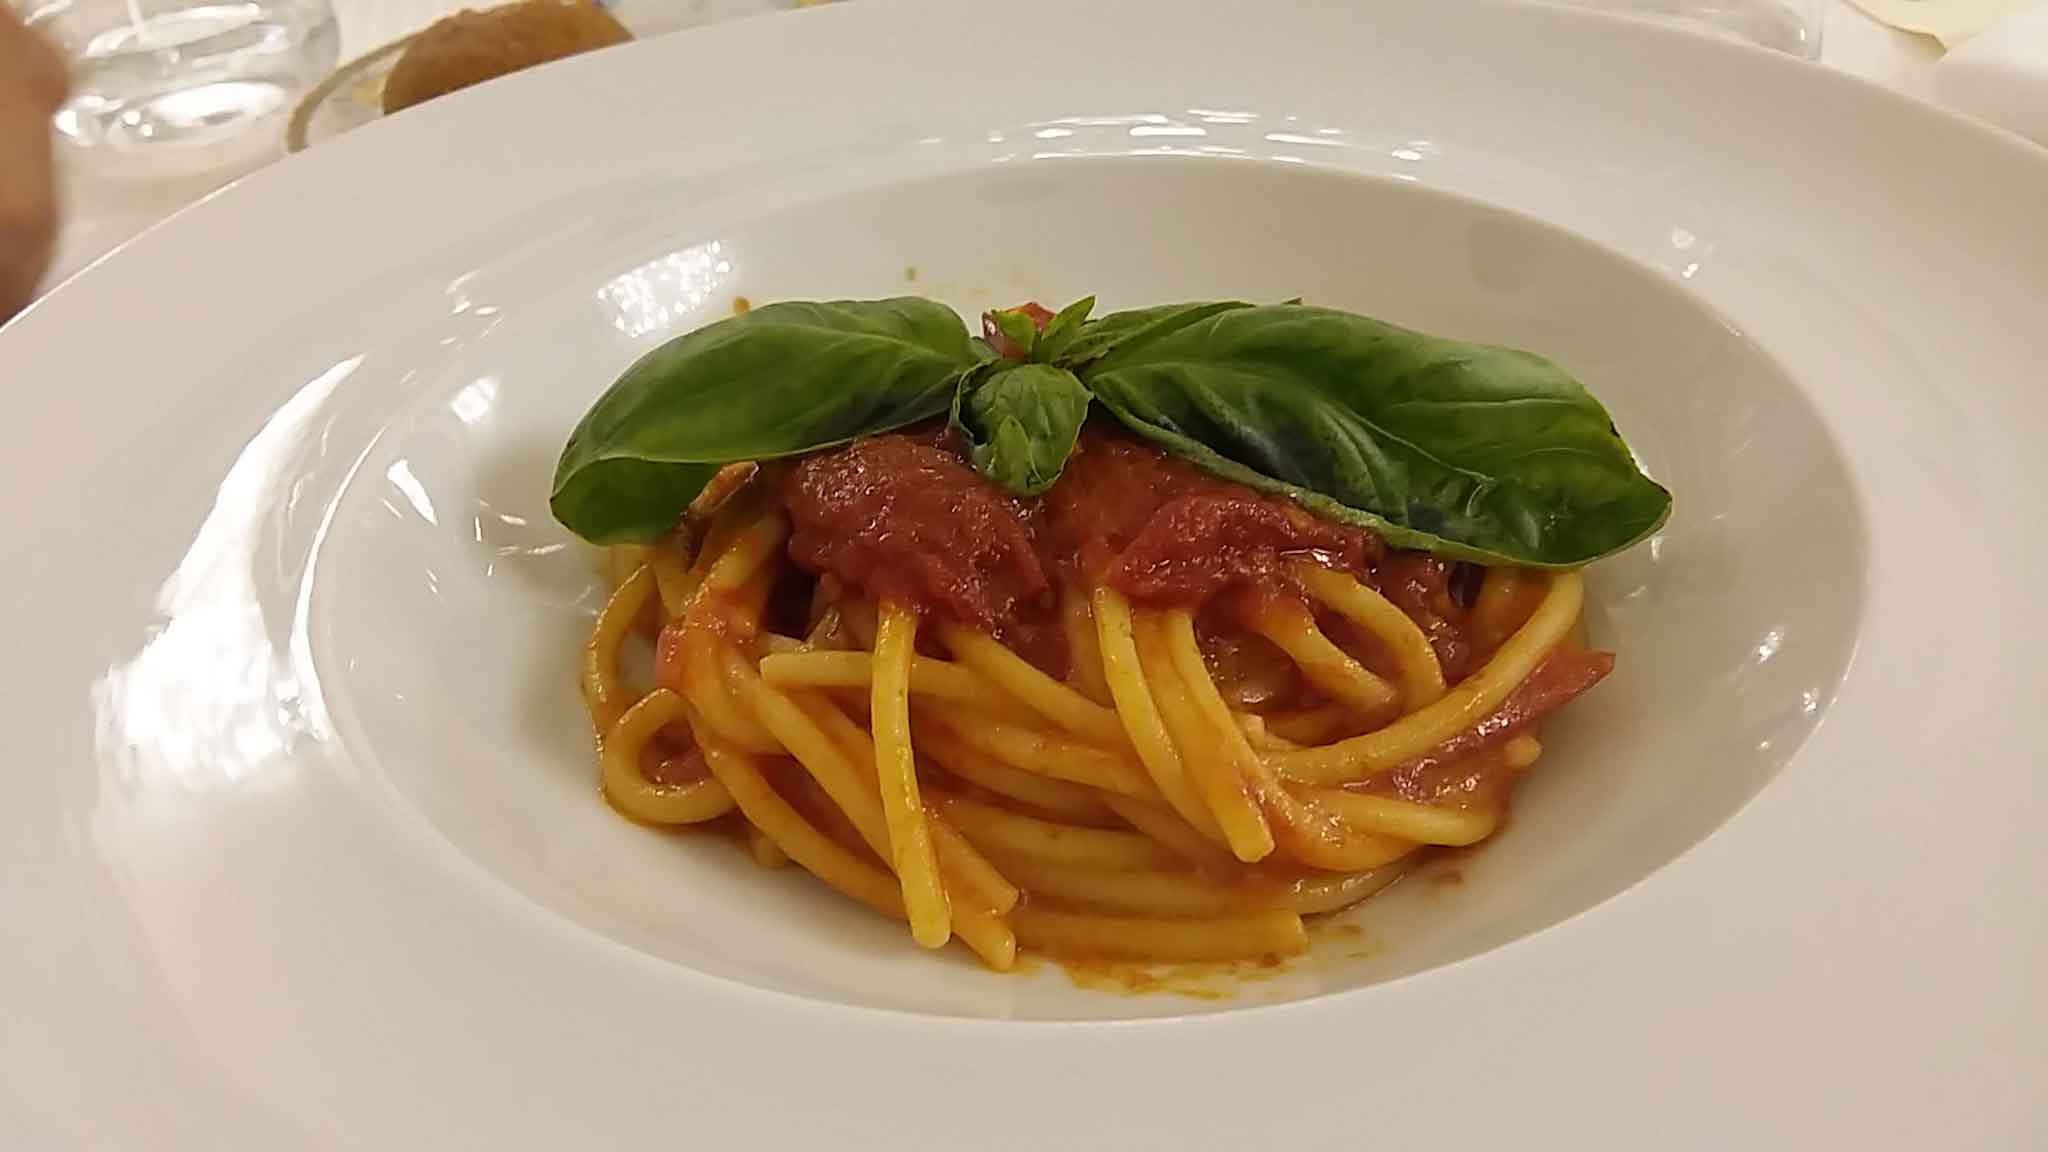 spaghettone